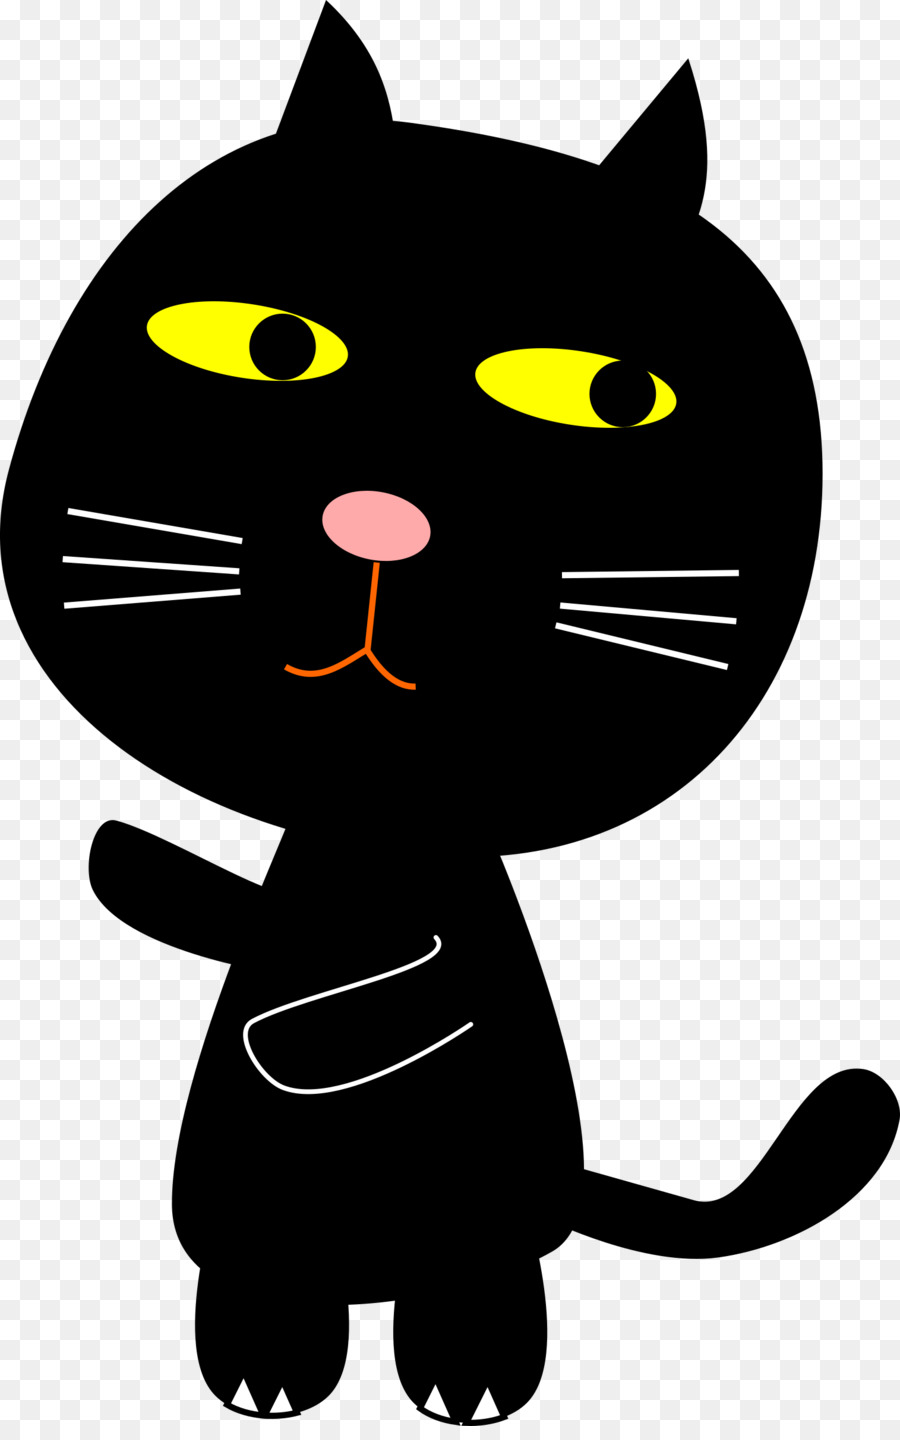 Mèo đen nhút nhát